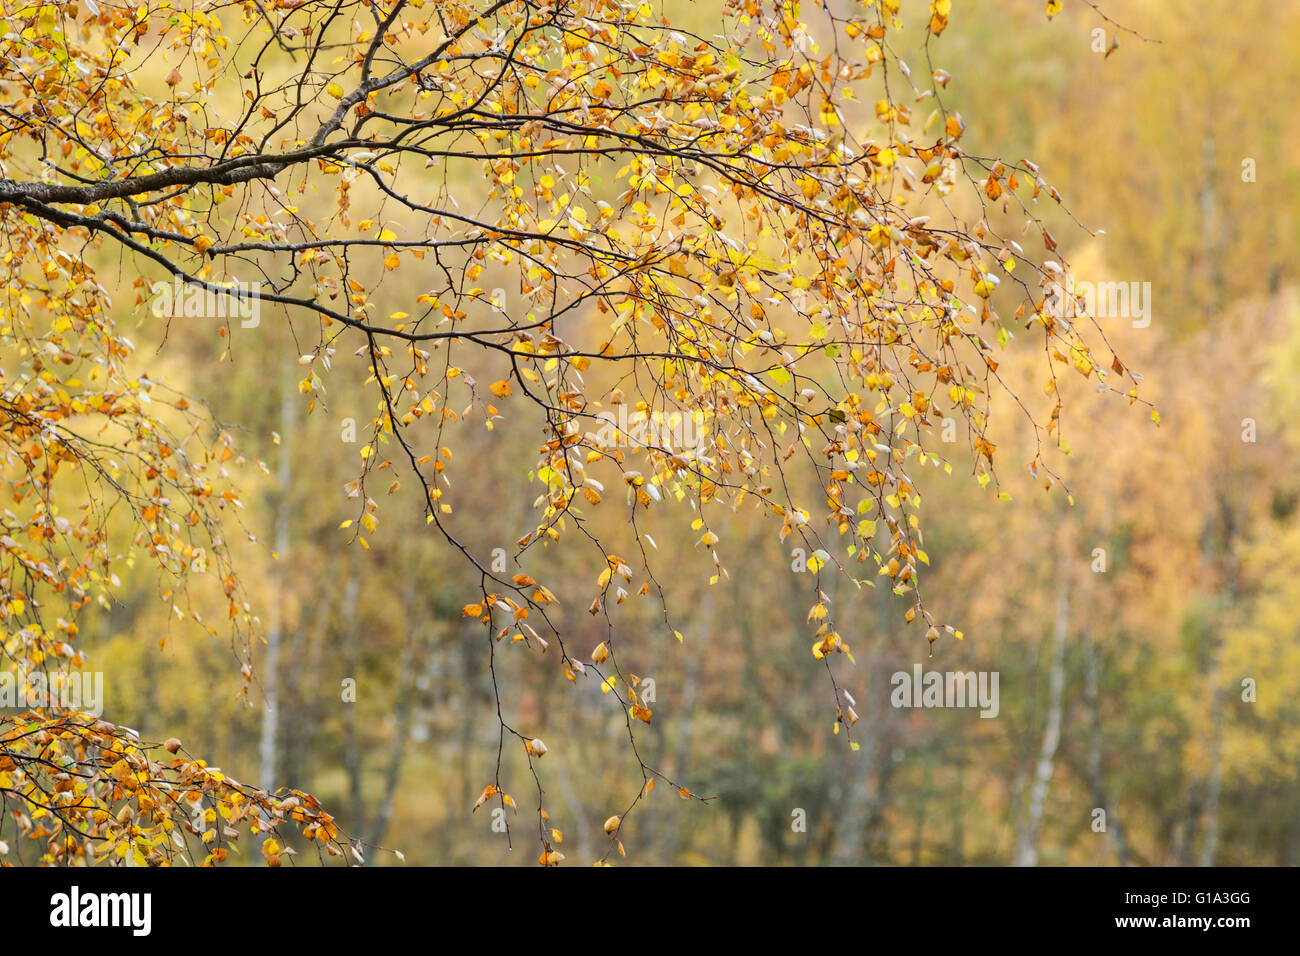 Silver birch leaves, Latin name Betula pendula, showing autumn colours Stock Photo